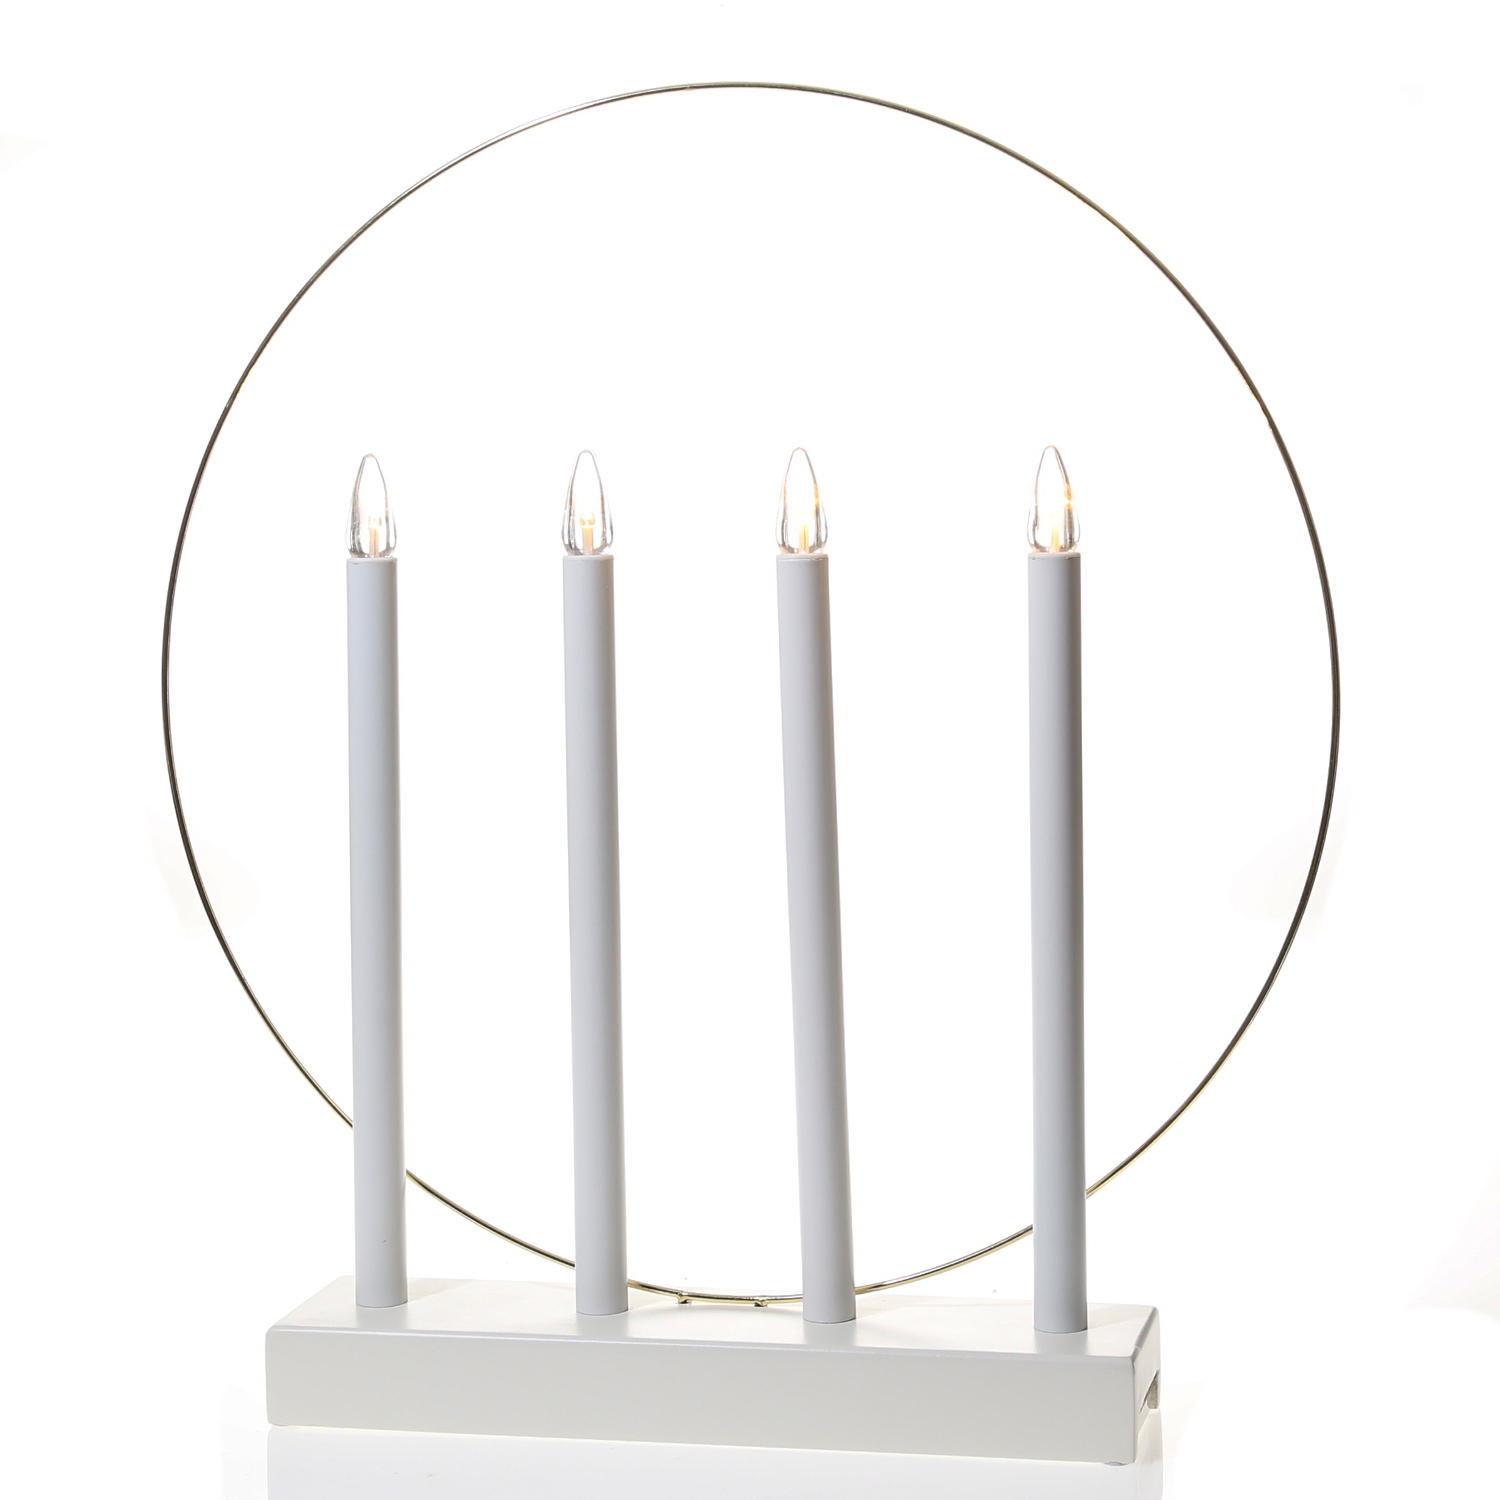 LED Fensterleuchter Glory - Kerzenleuchter mit Ring - 4flammig - warmweiße  LED - H: 45cm - Timer